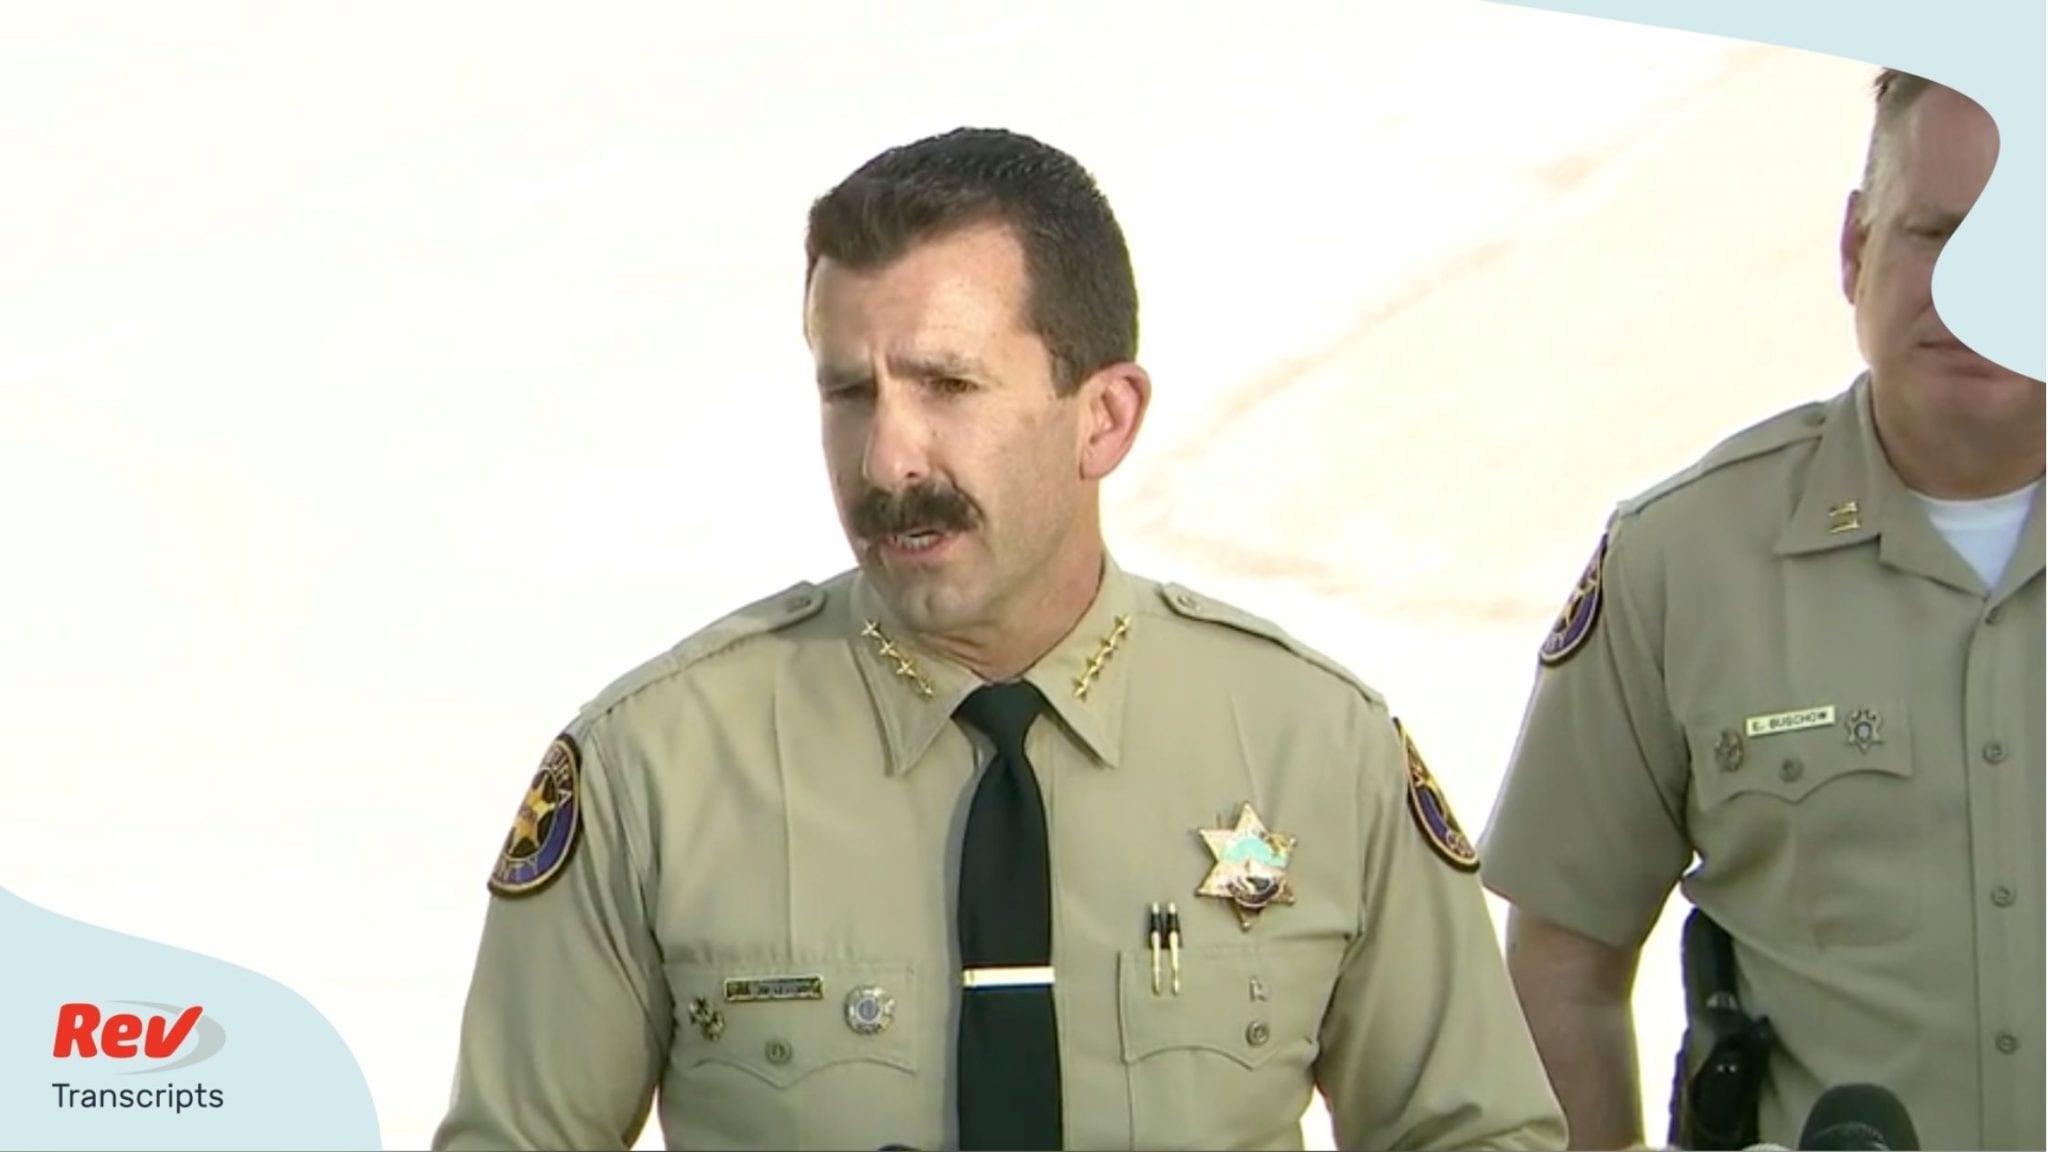 Ventura Sheriff gives press conference on death of 'Glee' actress Naya Rivera